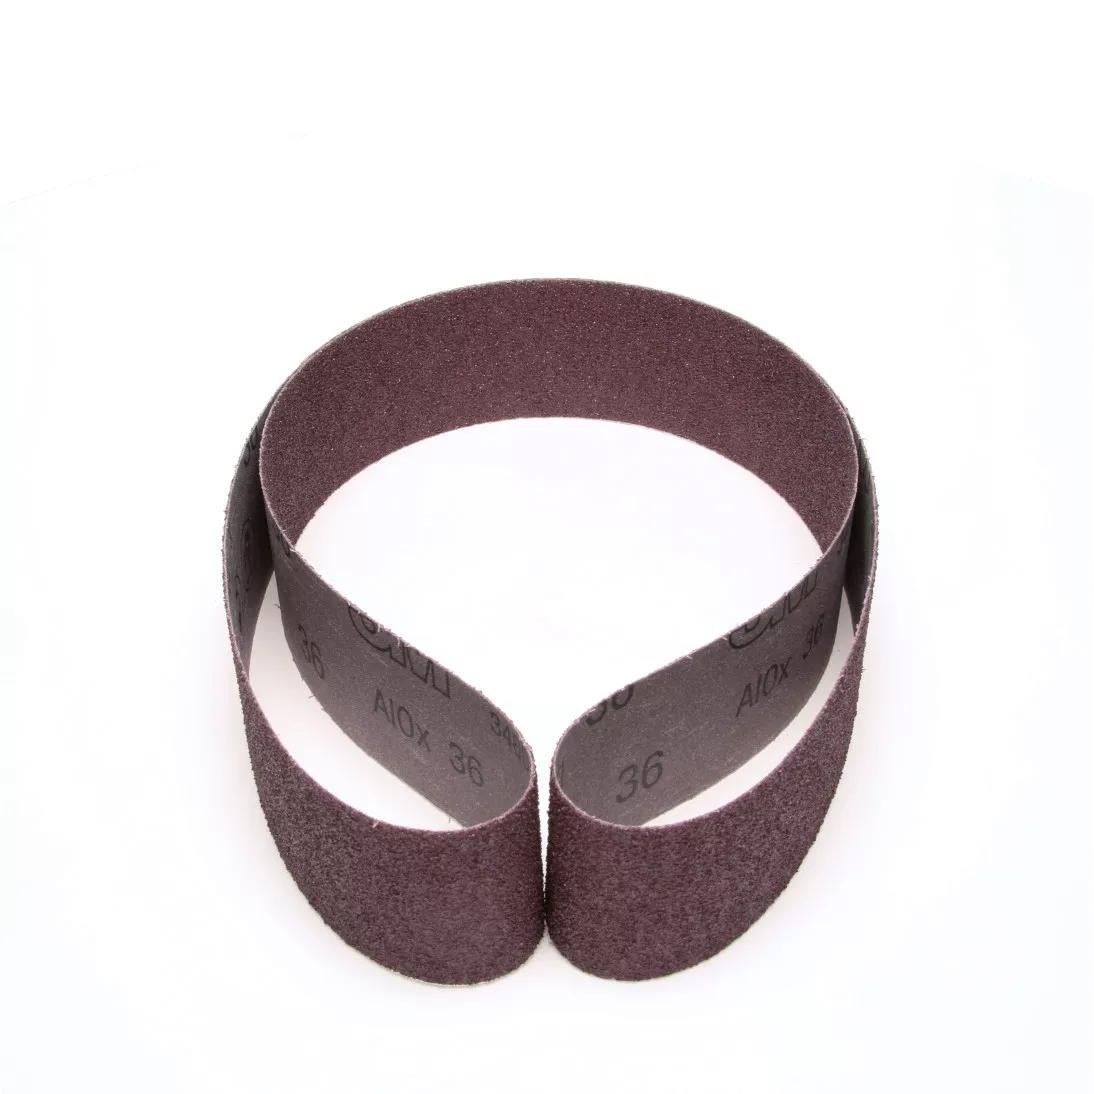 3M™ Cloth Belt 341D, 36 X-weight, 2-1/2 in x 60 in, Film-lok,
Single-flex, 50 ea/Case